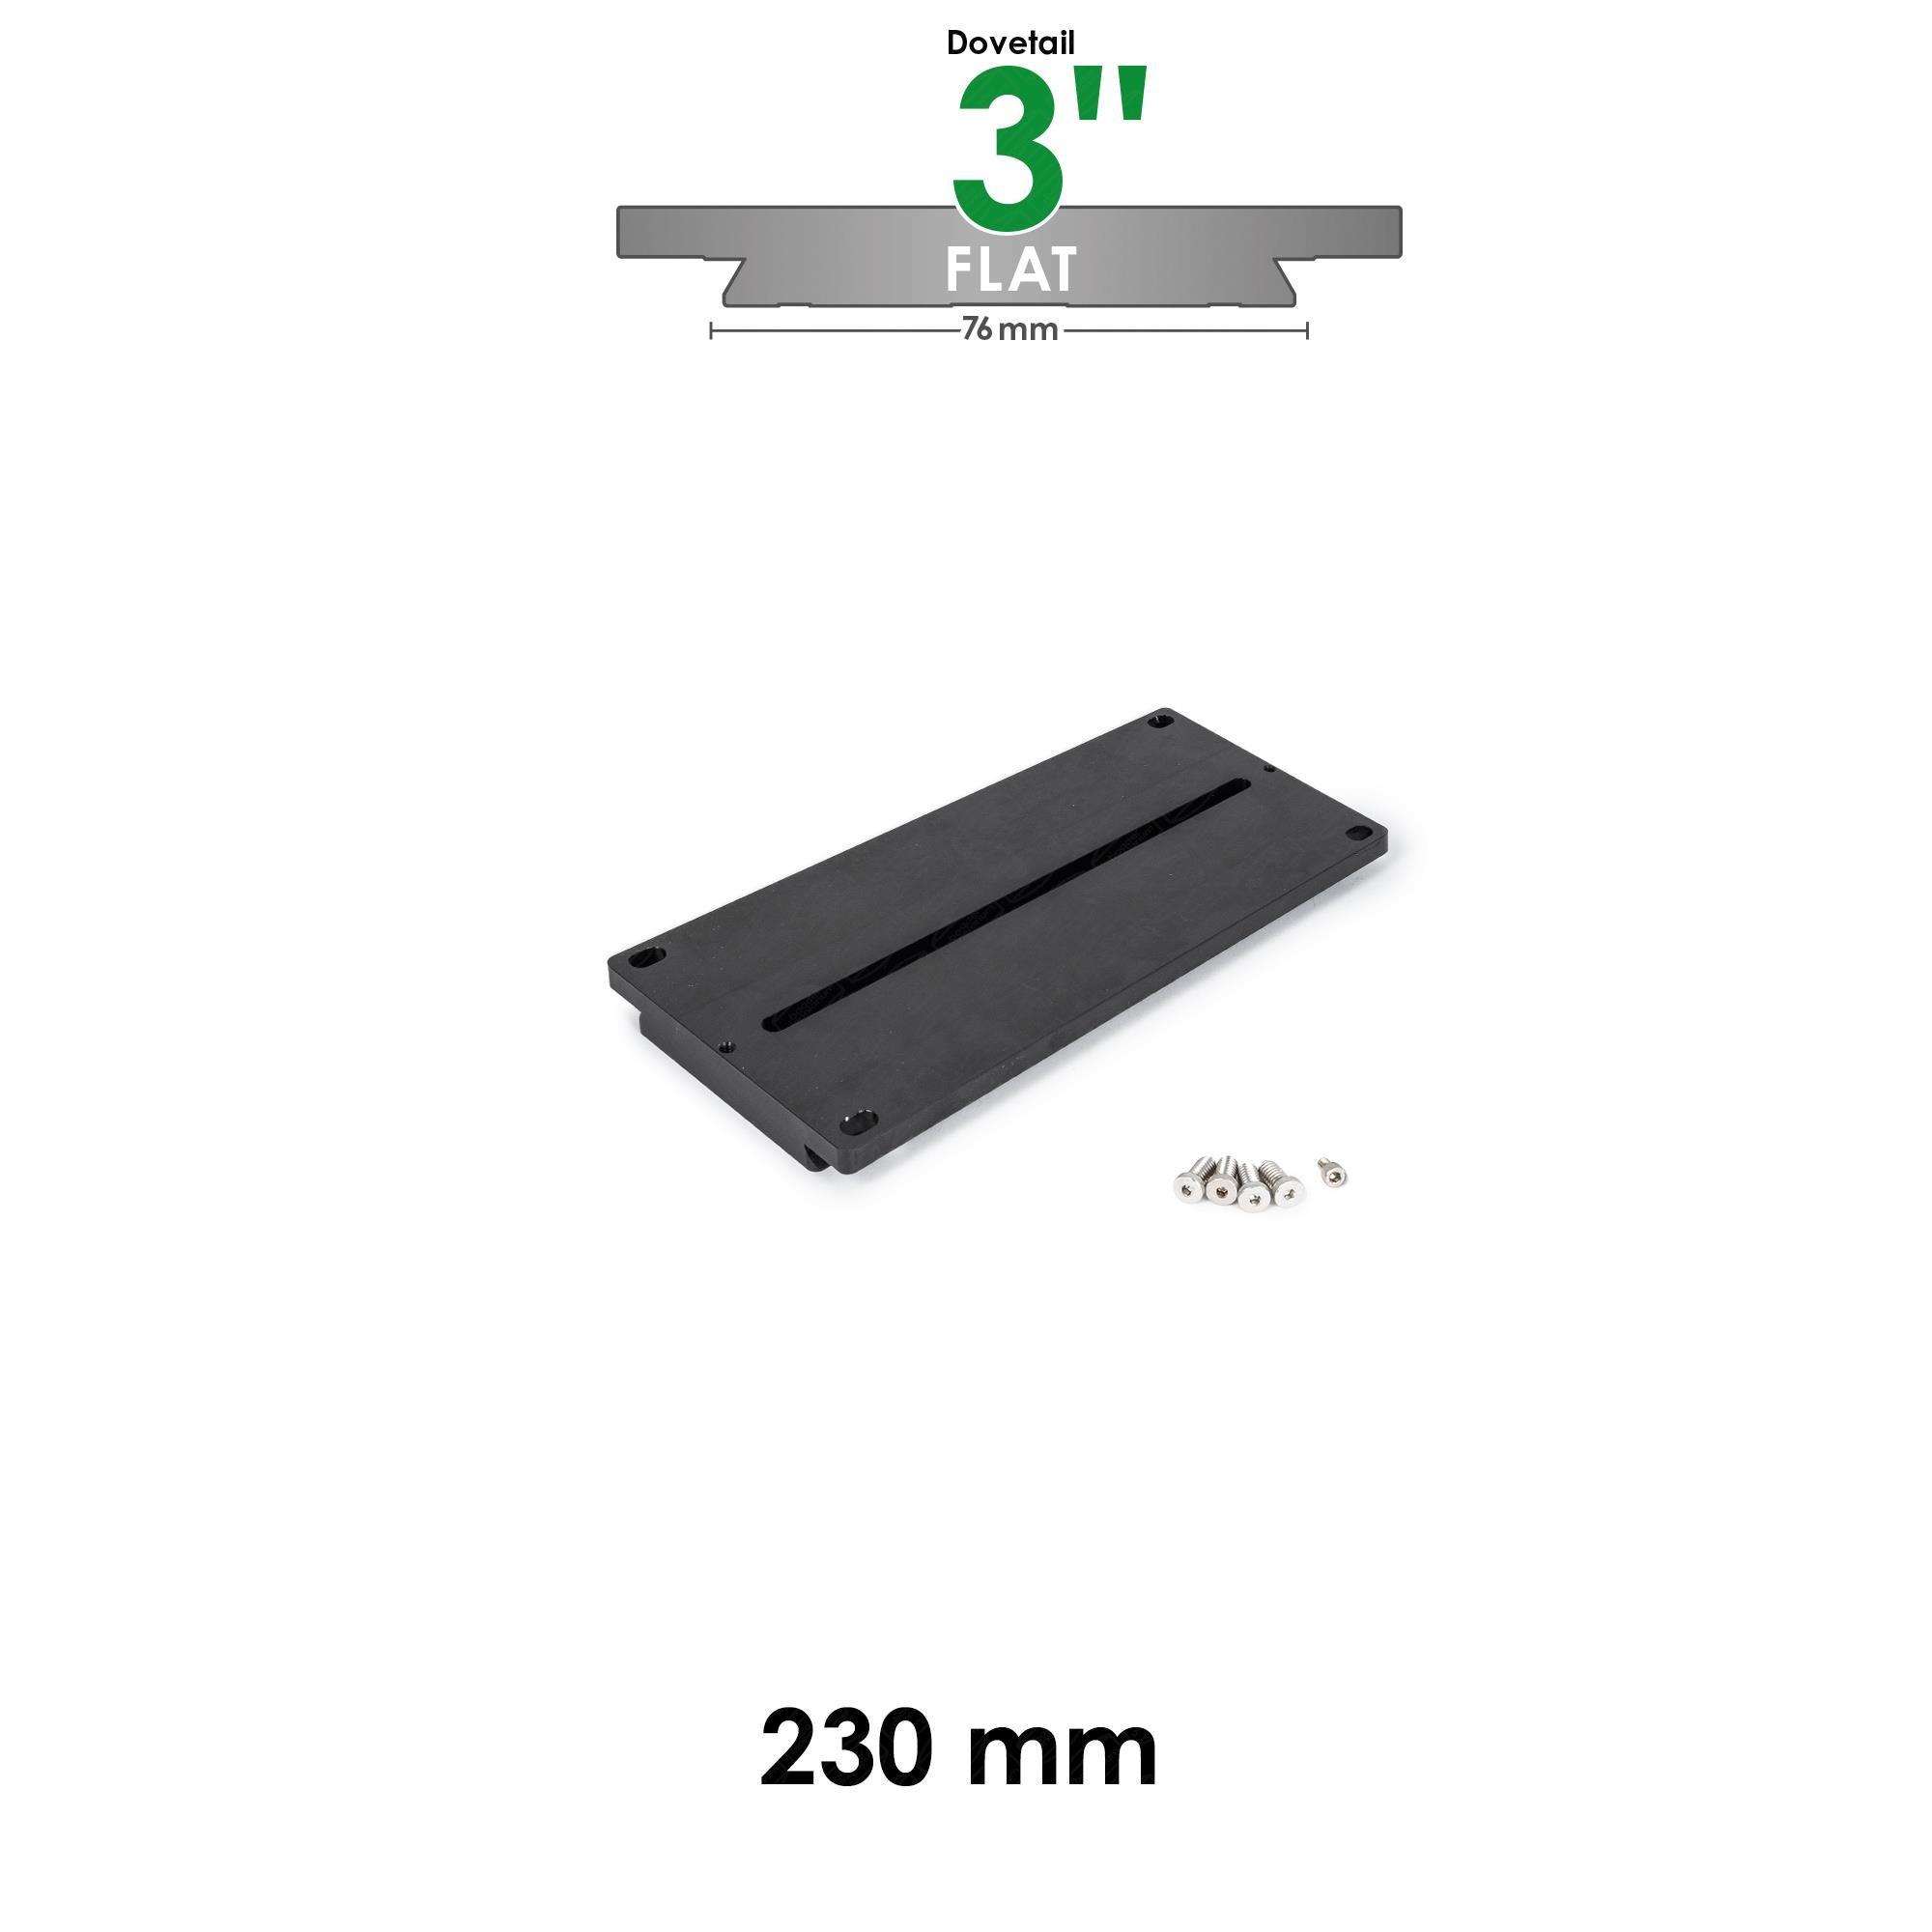 TEC 9“ Dovetail (230 mm)